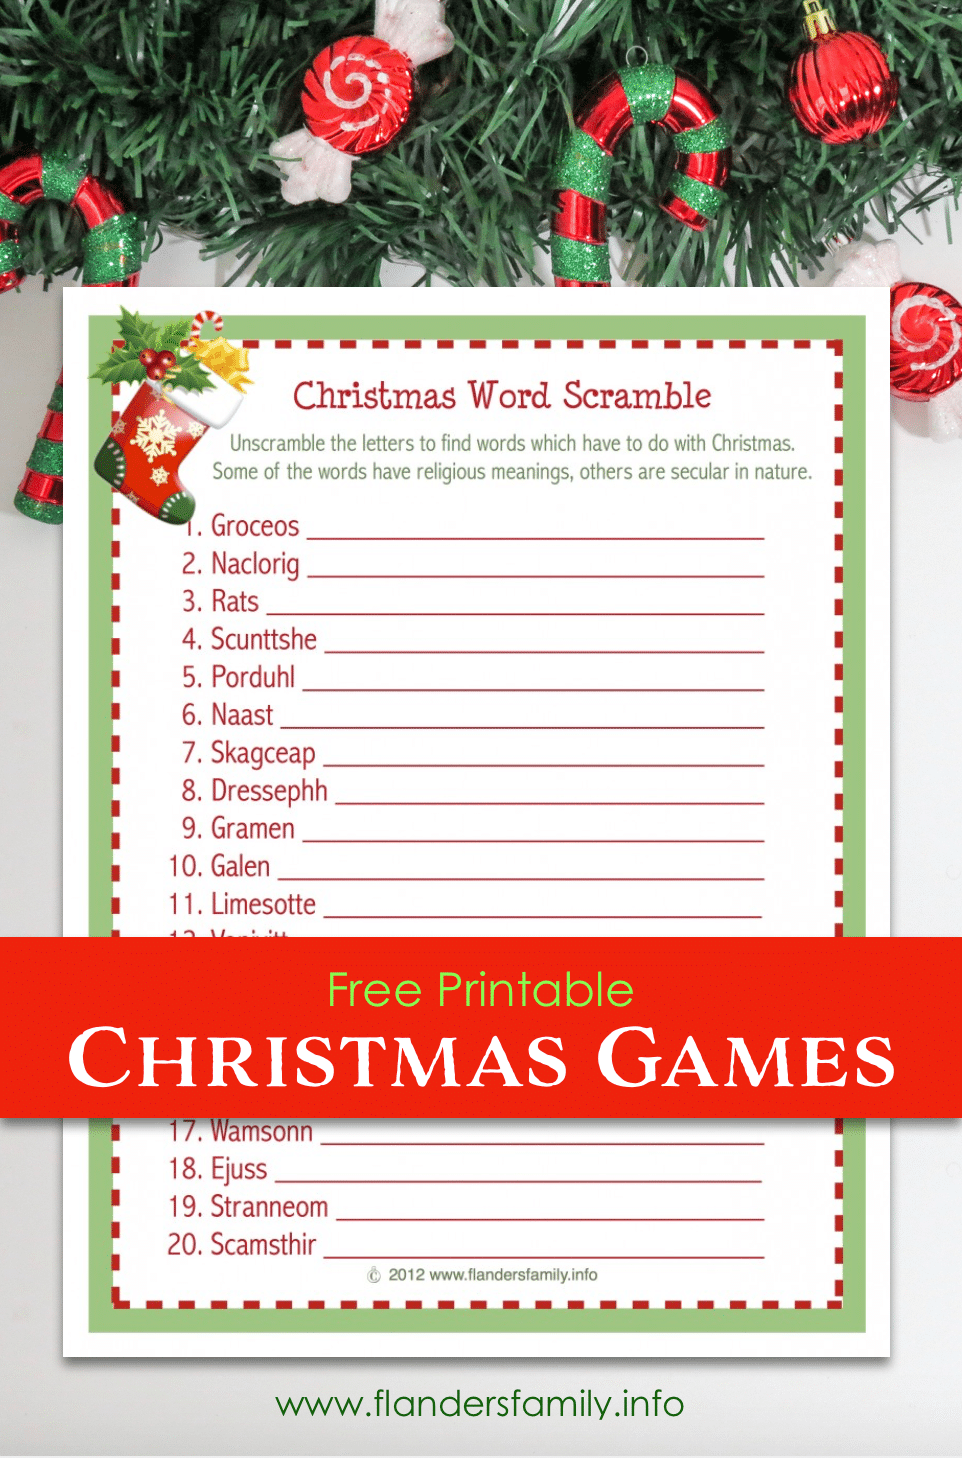 Christmas Word Scramble (Free Printable) - Flanders Family